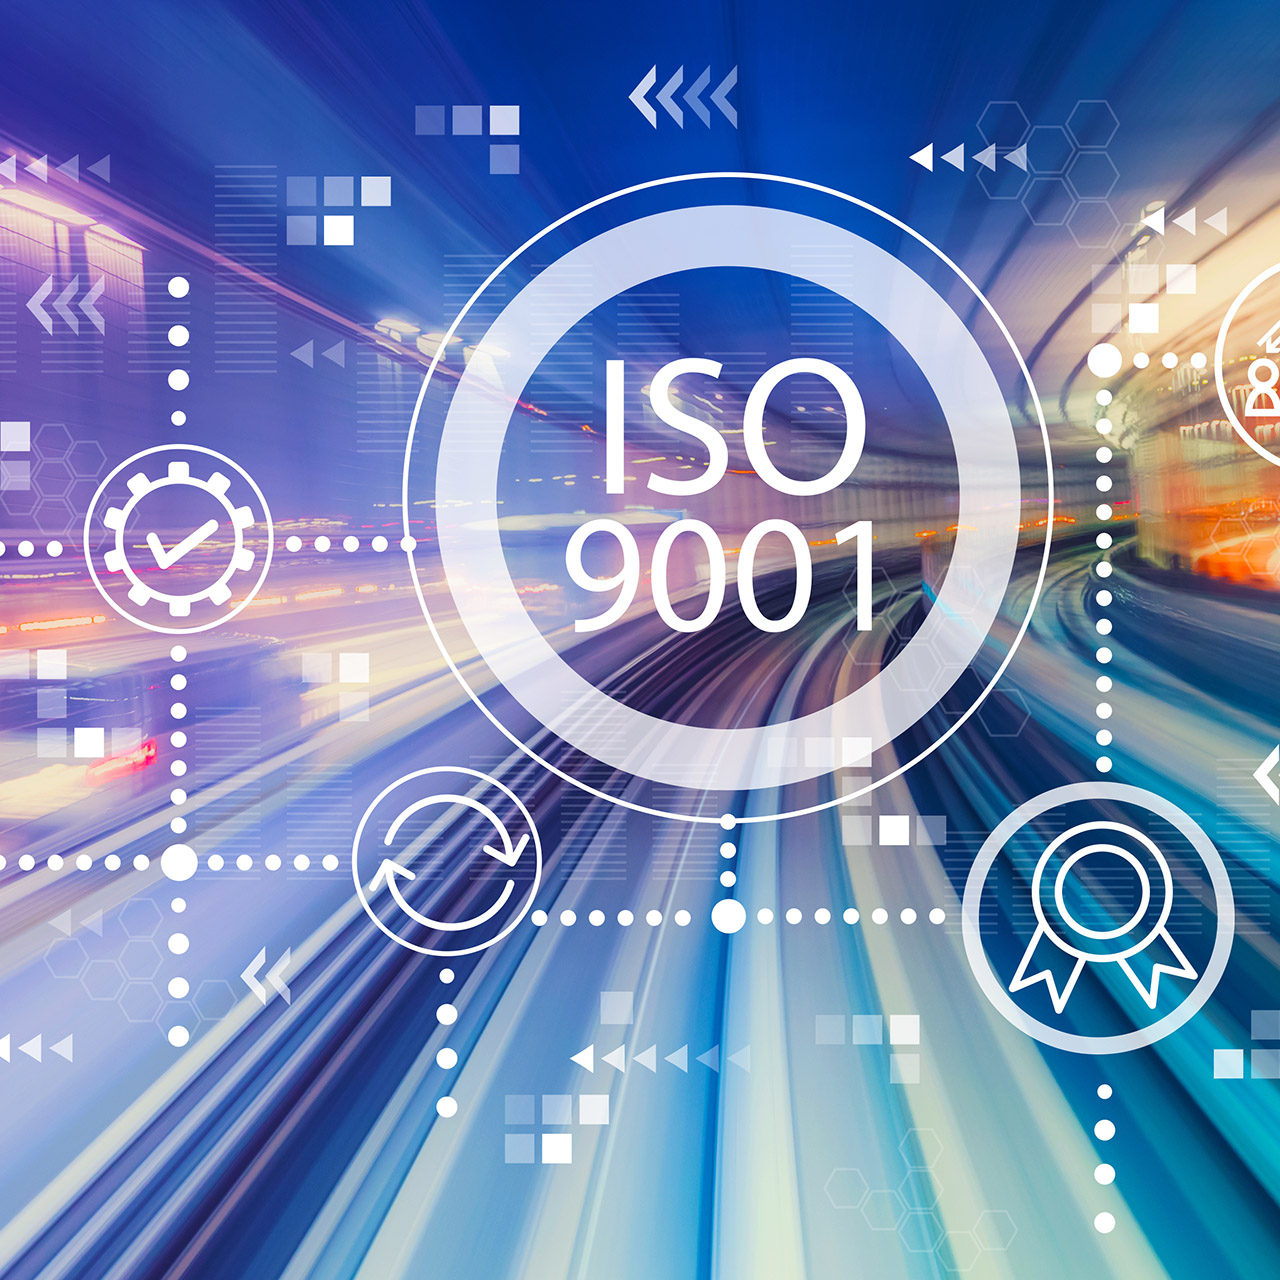 ISO 9001 and CMMC compliance